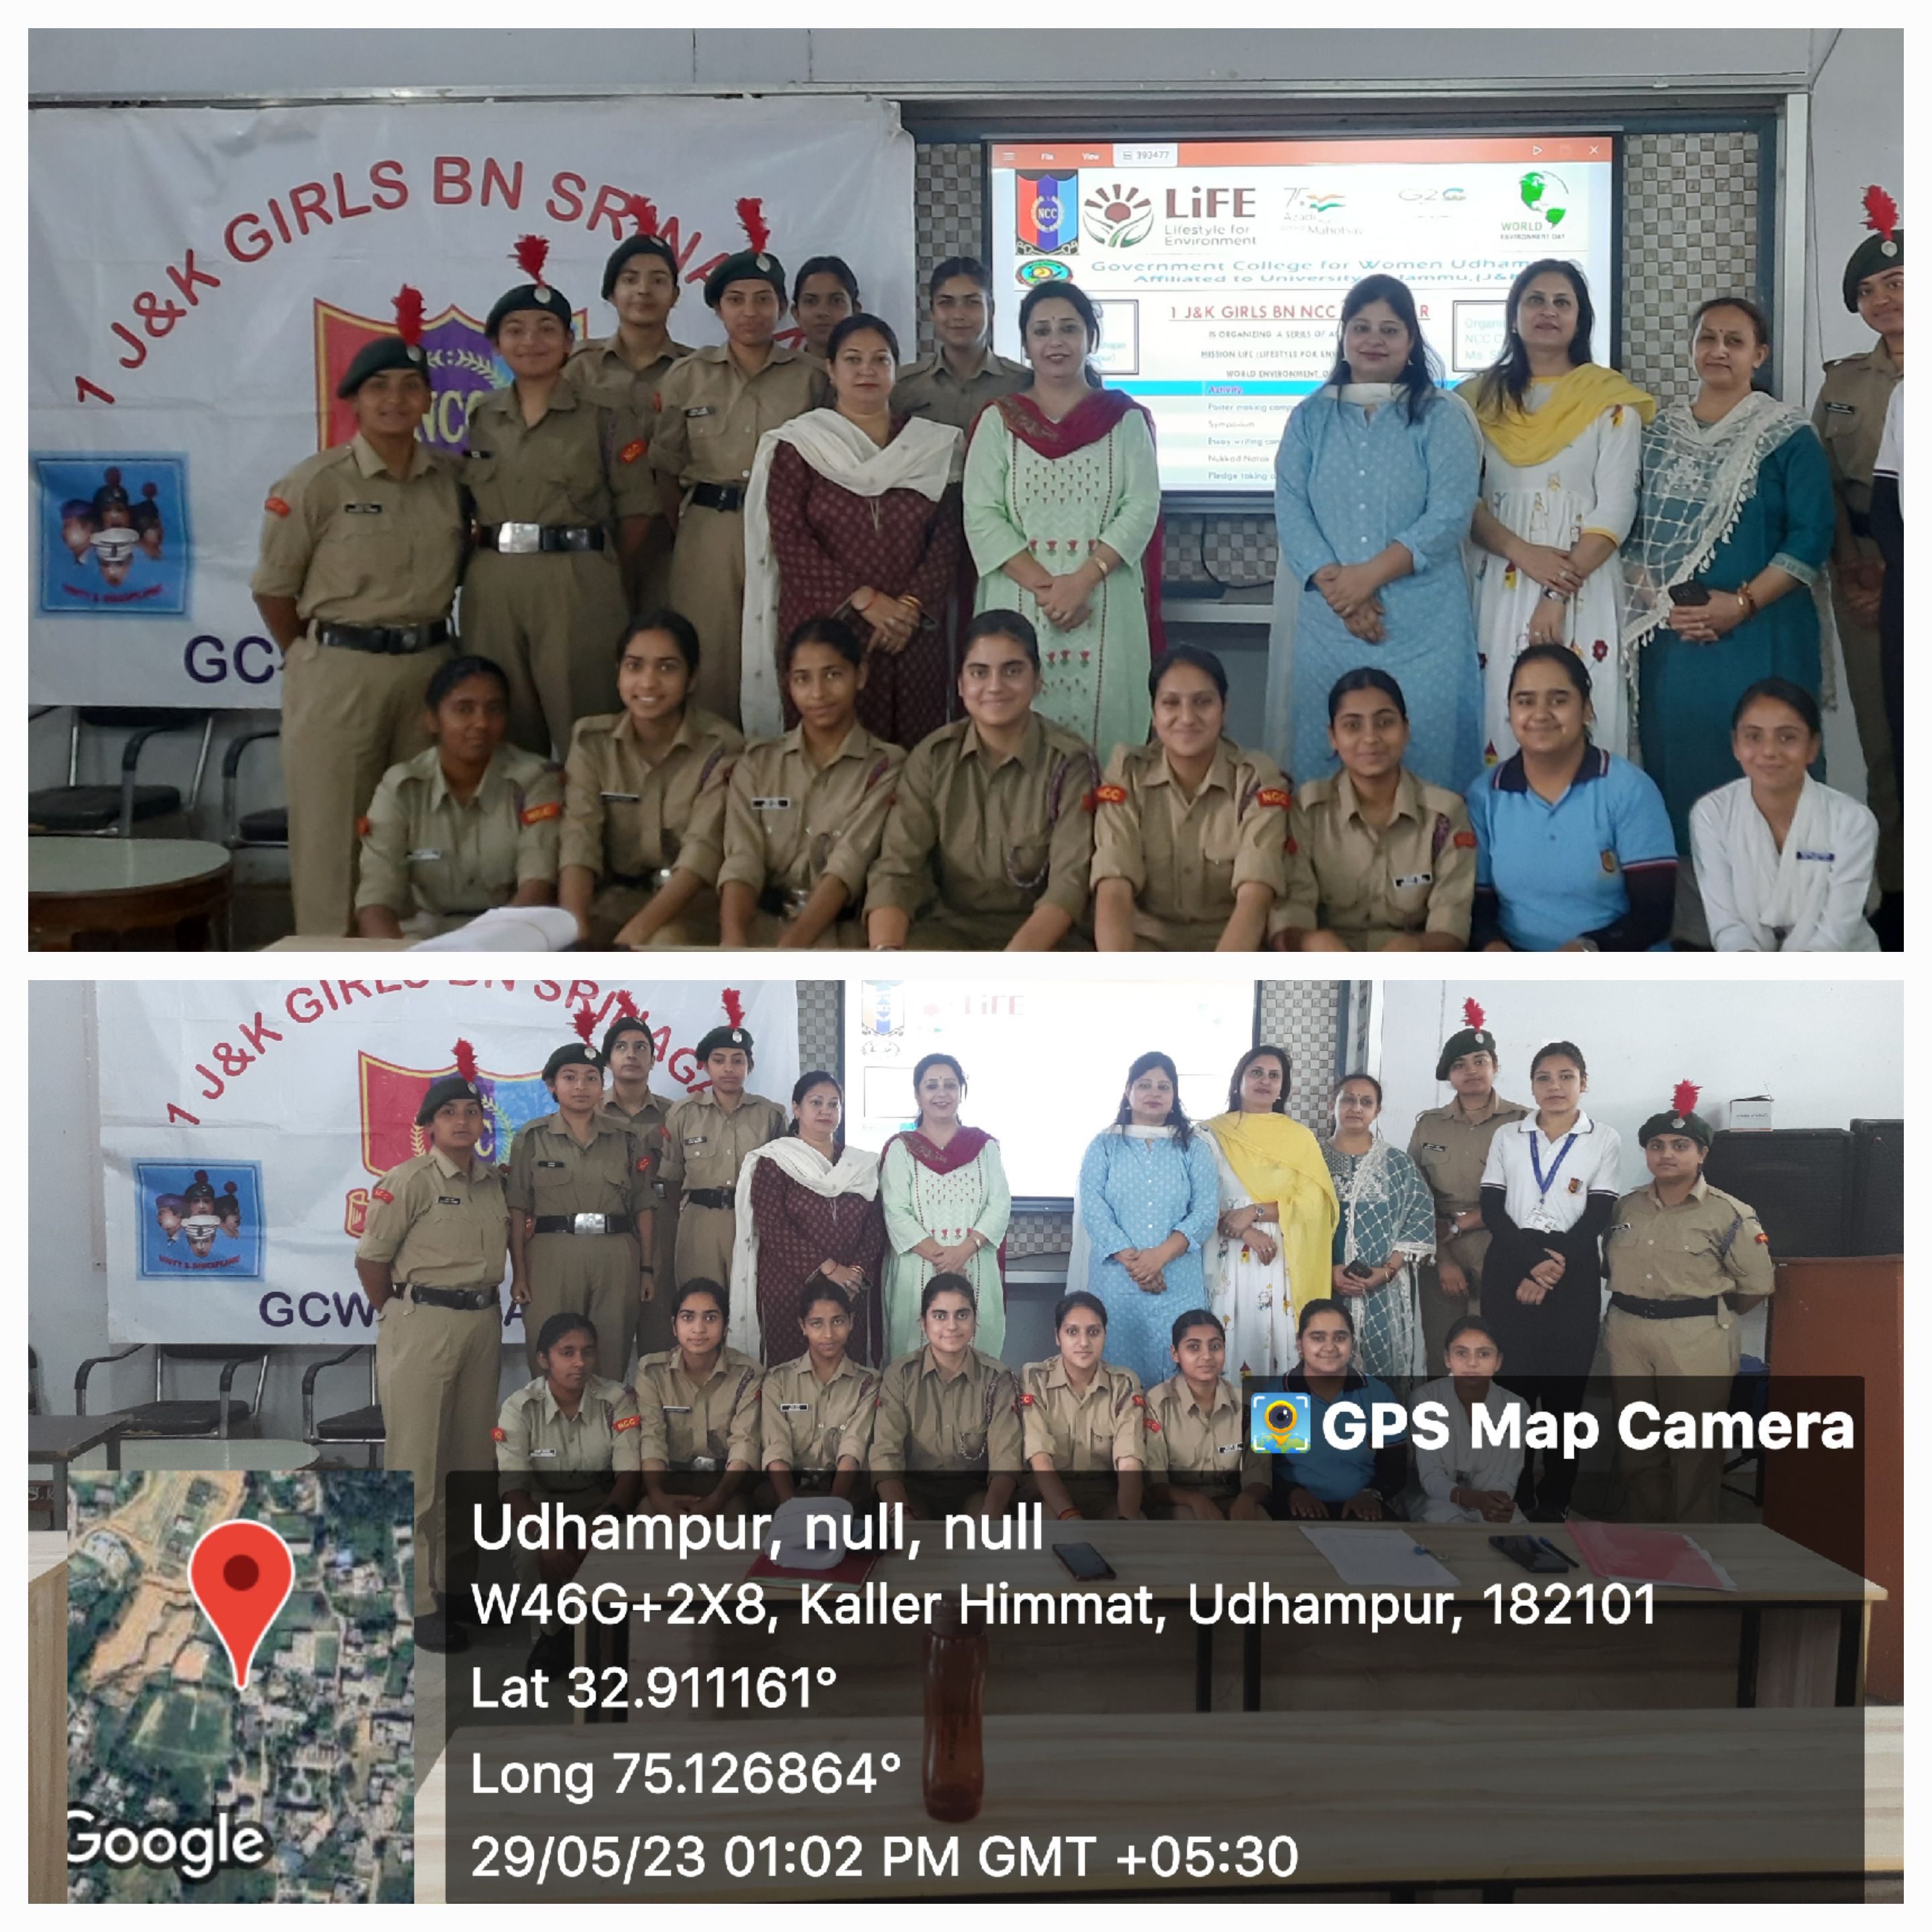 ncc-unit-1-jk-girls-battalion-ncc-srinagar-of-gcw-udhampur-organised-smposium-under-mission-life-for-environment-